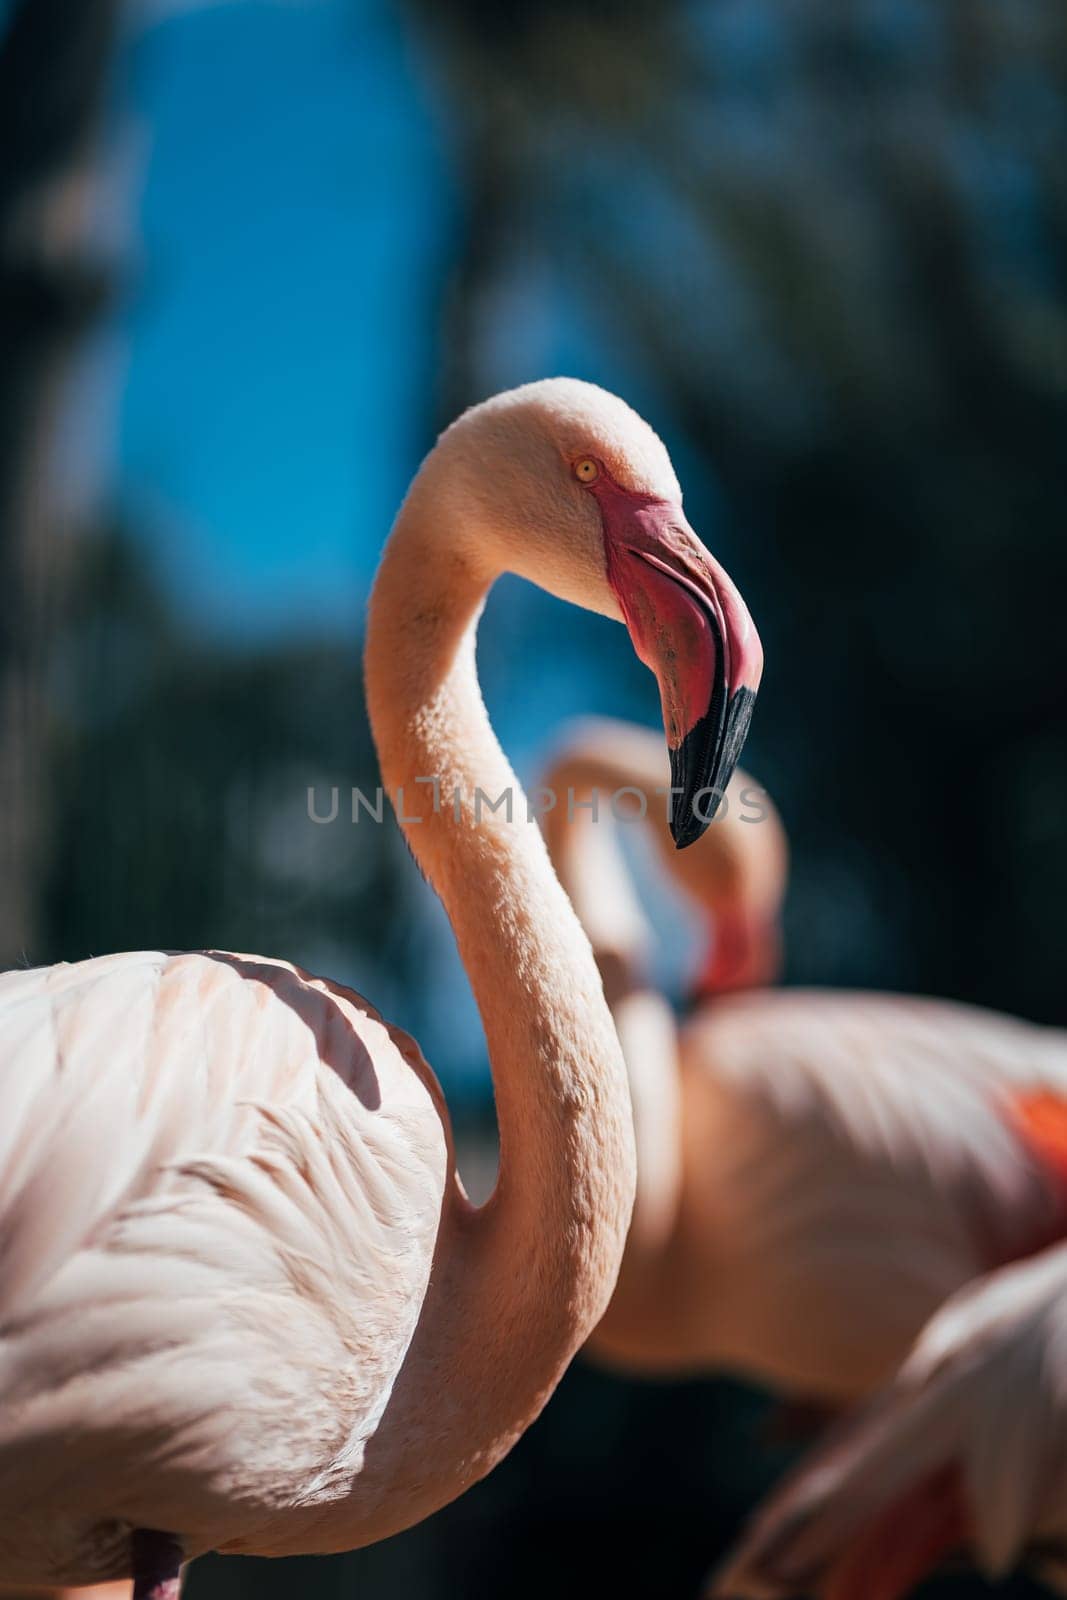 Flamingo Close-up: a Stunning View of Wildlife Water Bird with a Beautiful Beak by apavlin